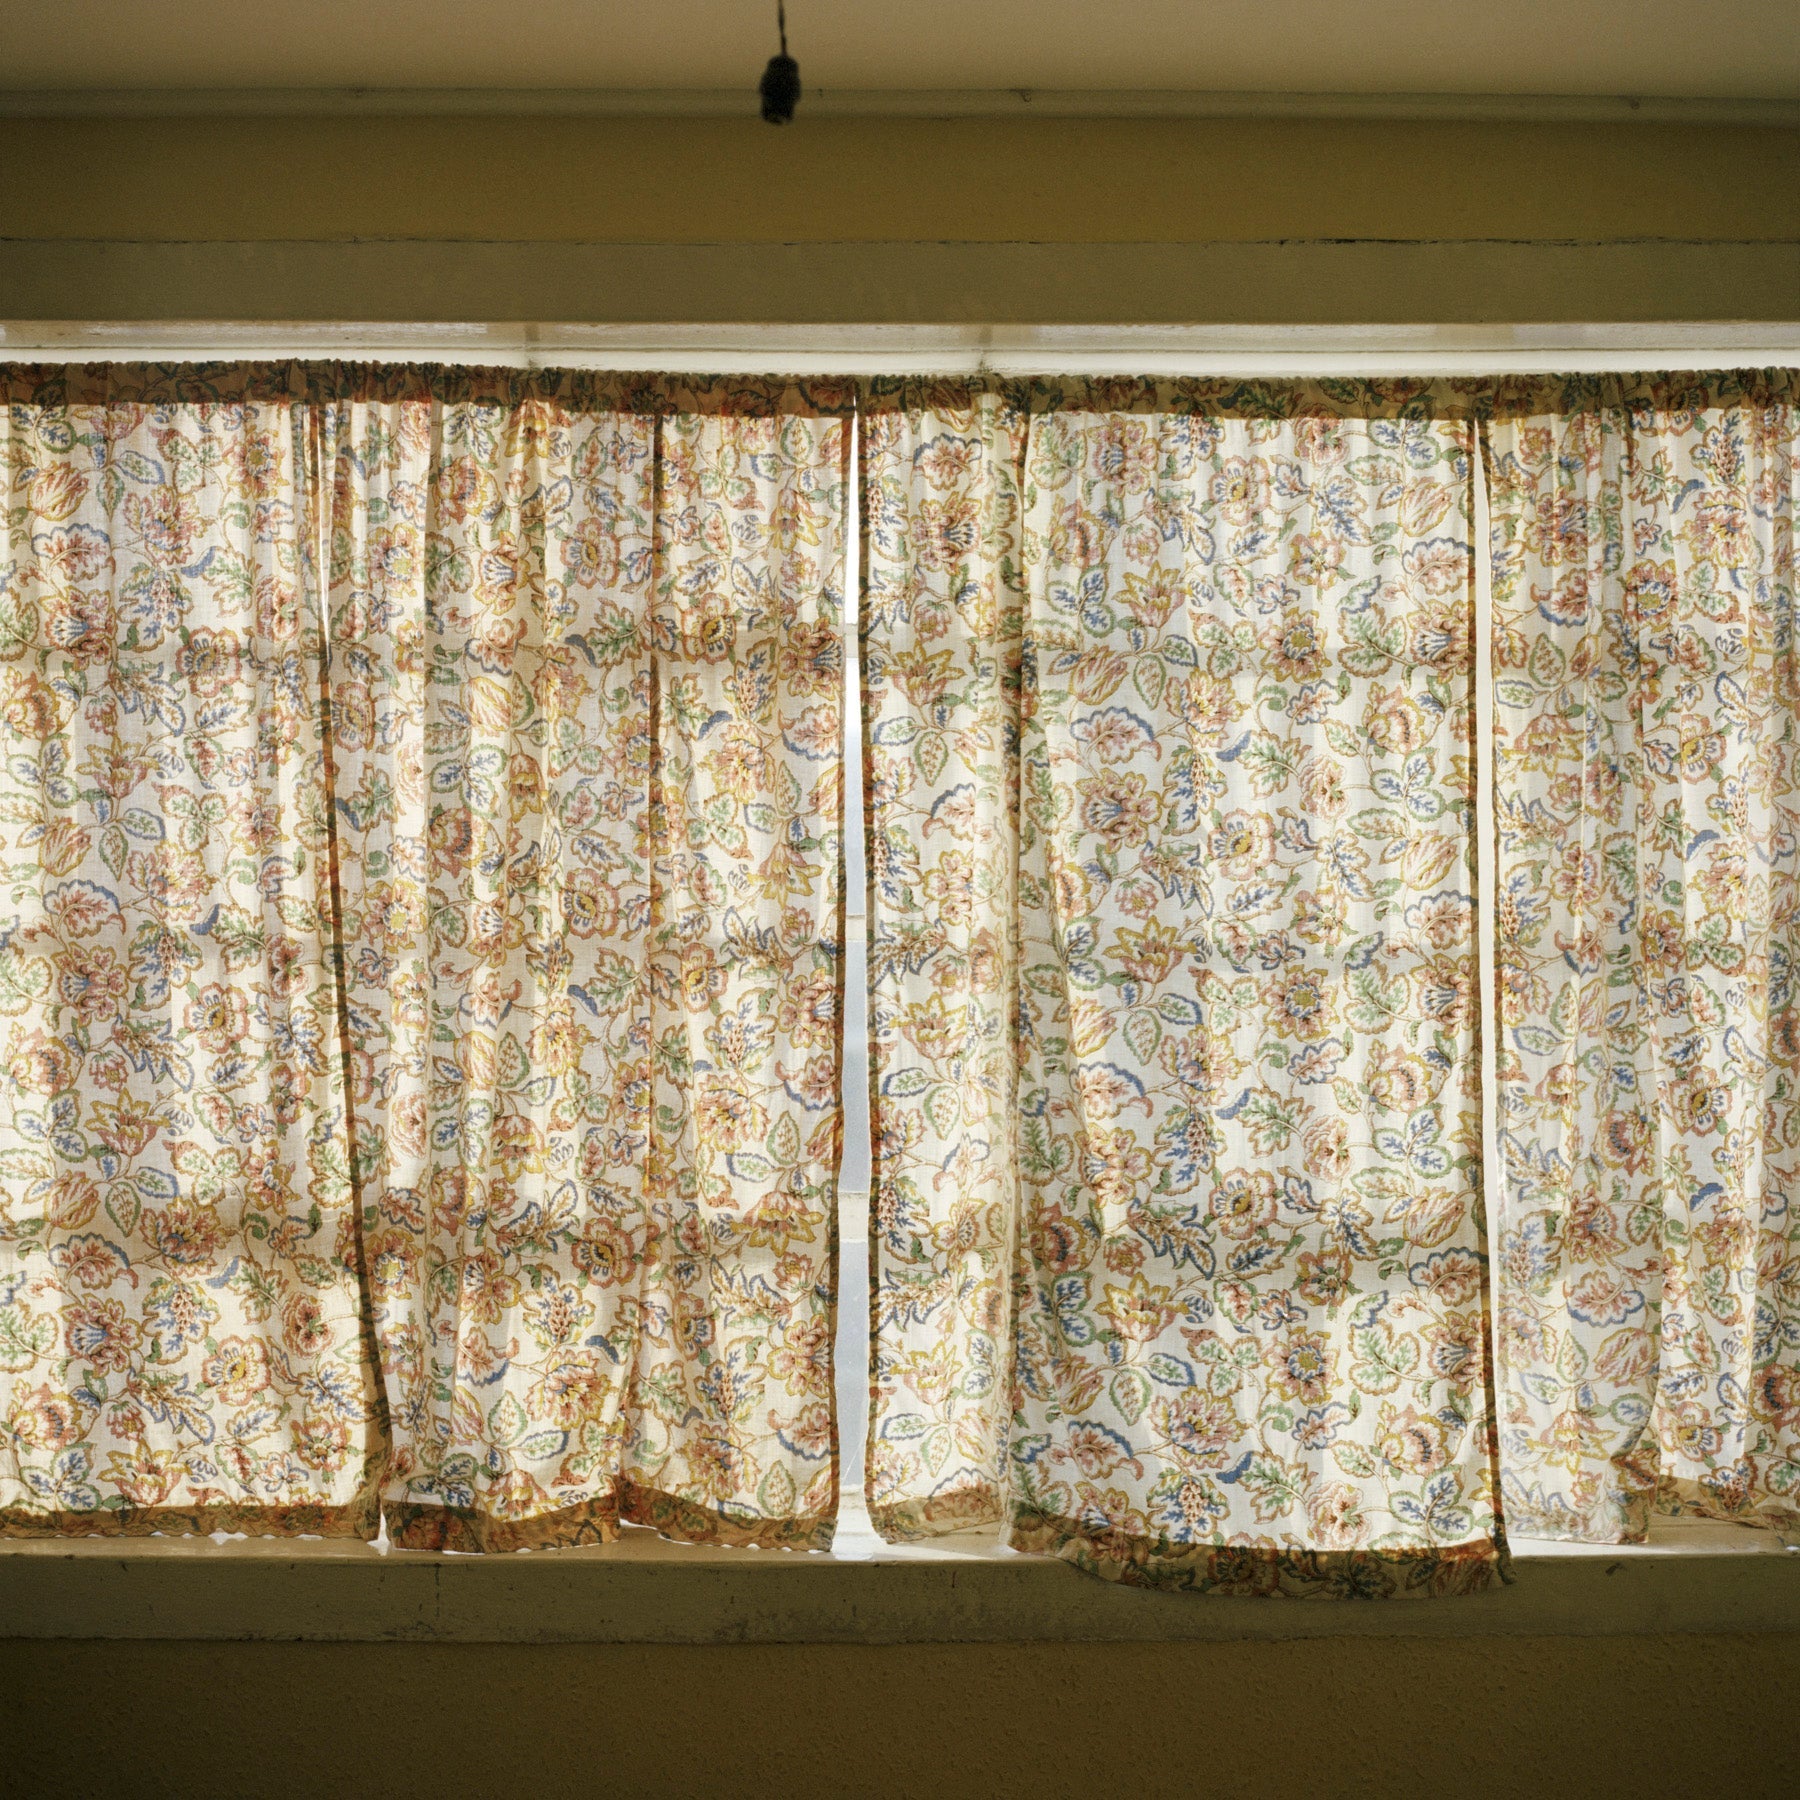 Closed curtains, Quarry Hill Flats, Leeds, 1978 - 7x9" Print